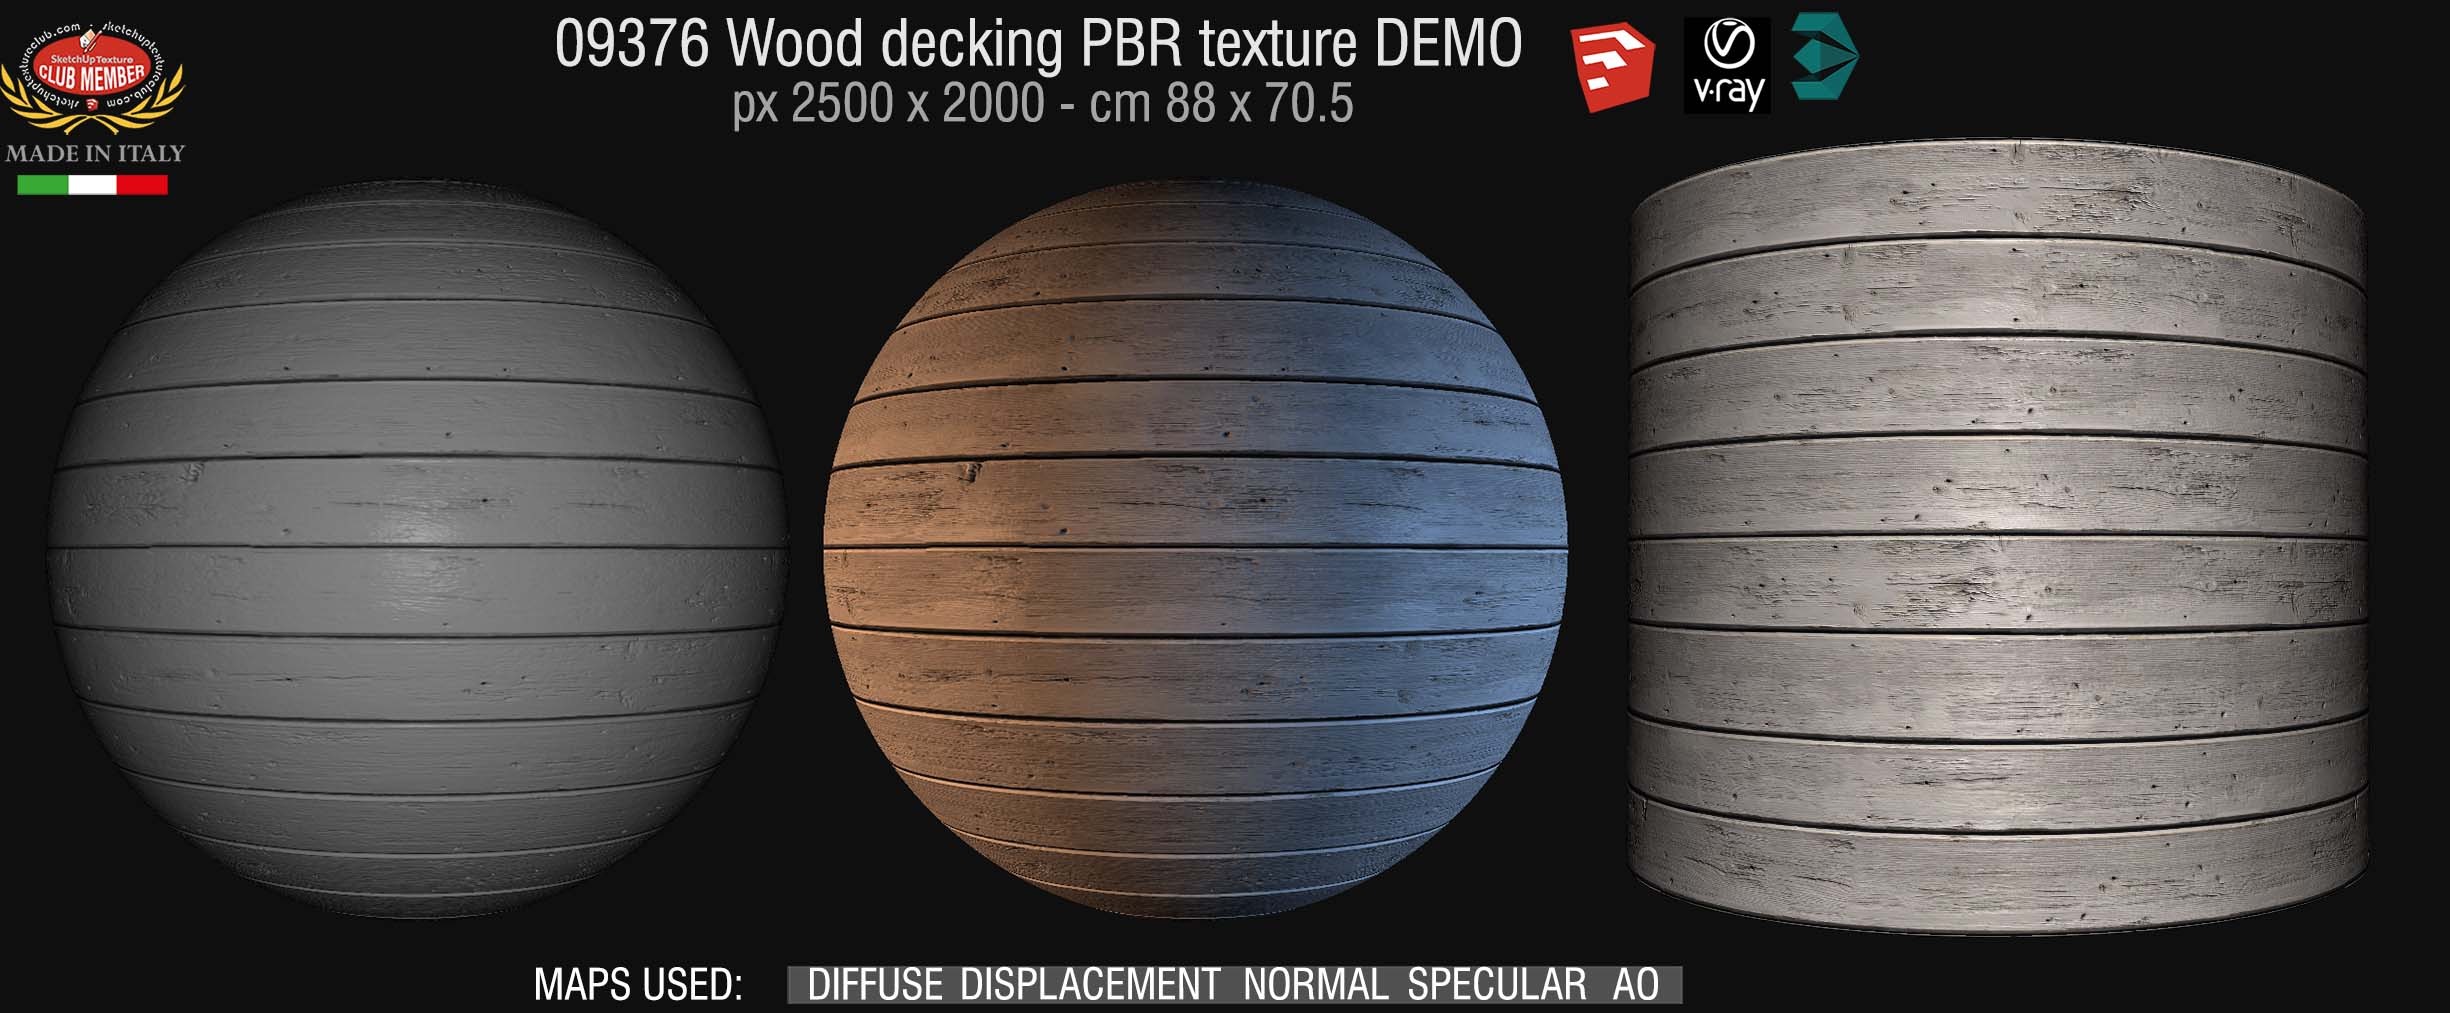 09376 Wood decking PBR texture seamless DEMO